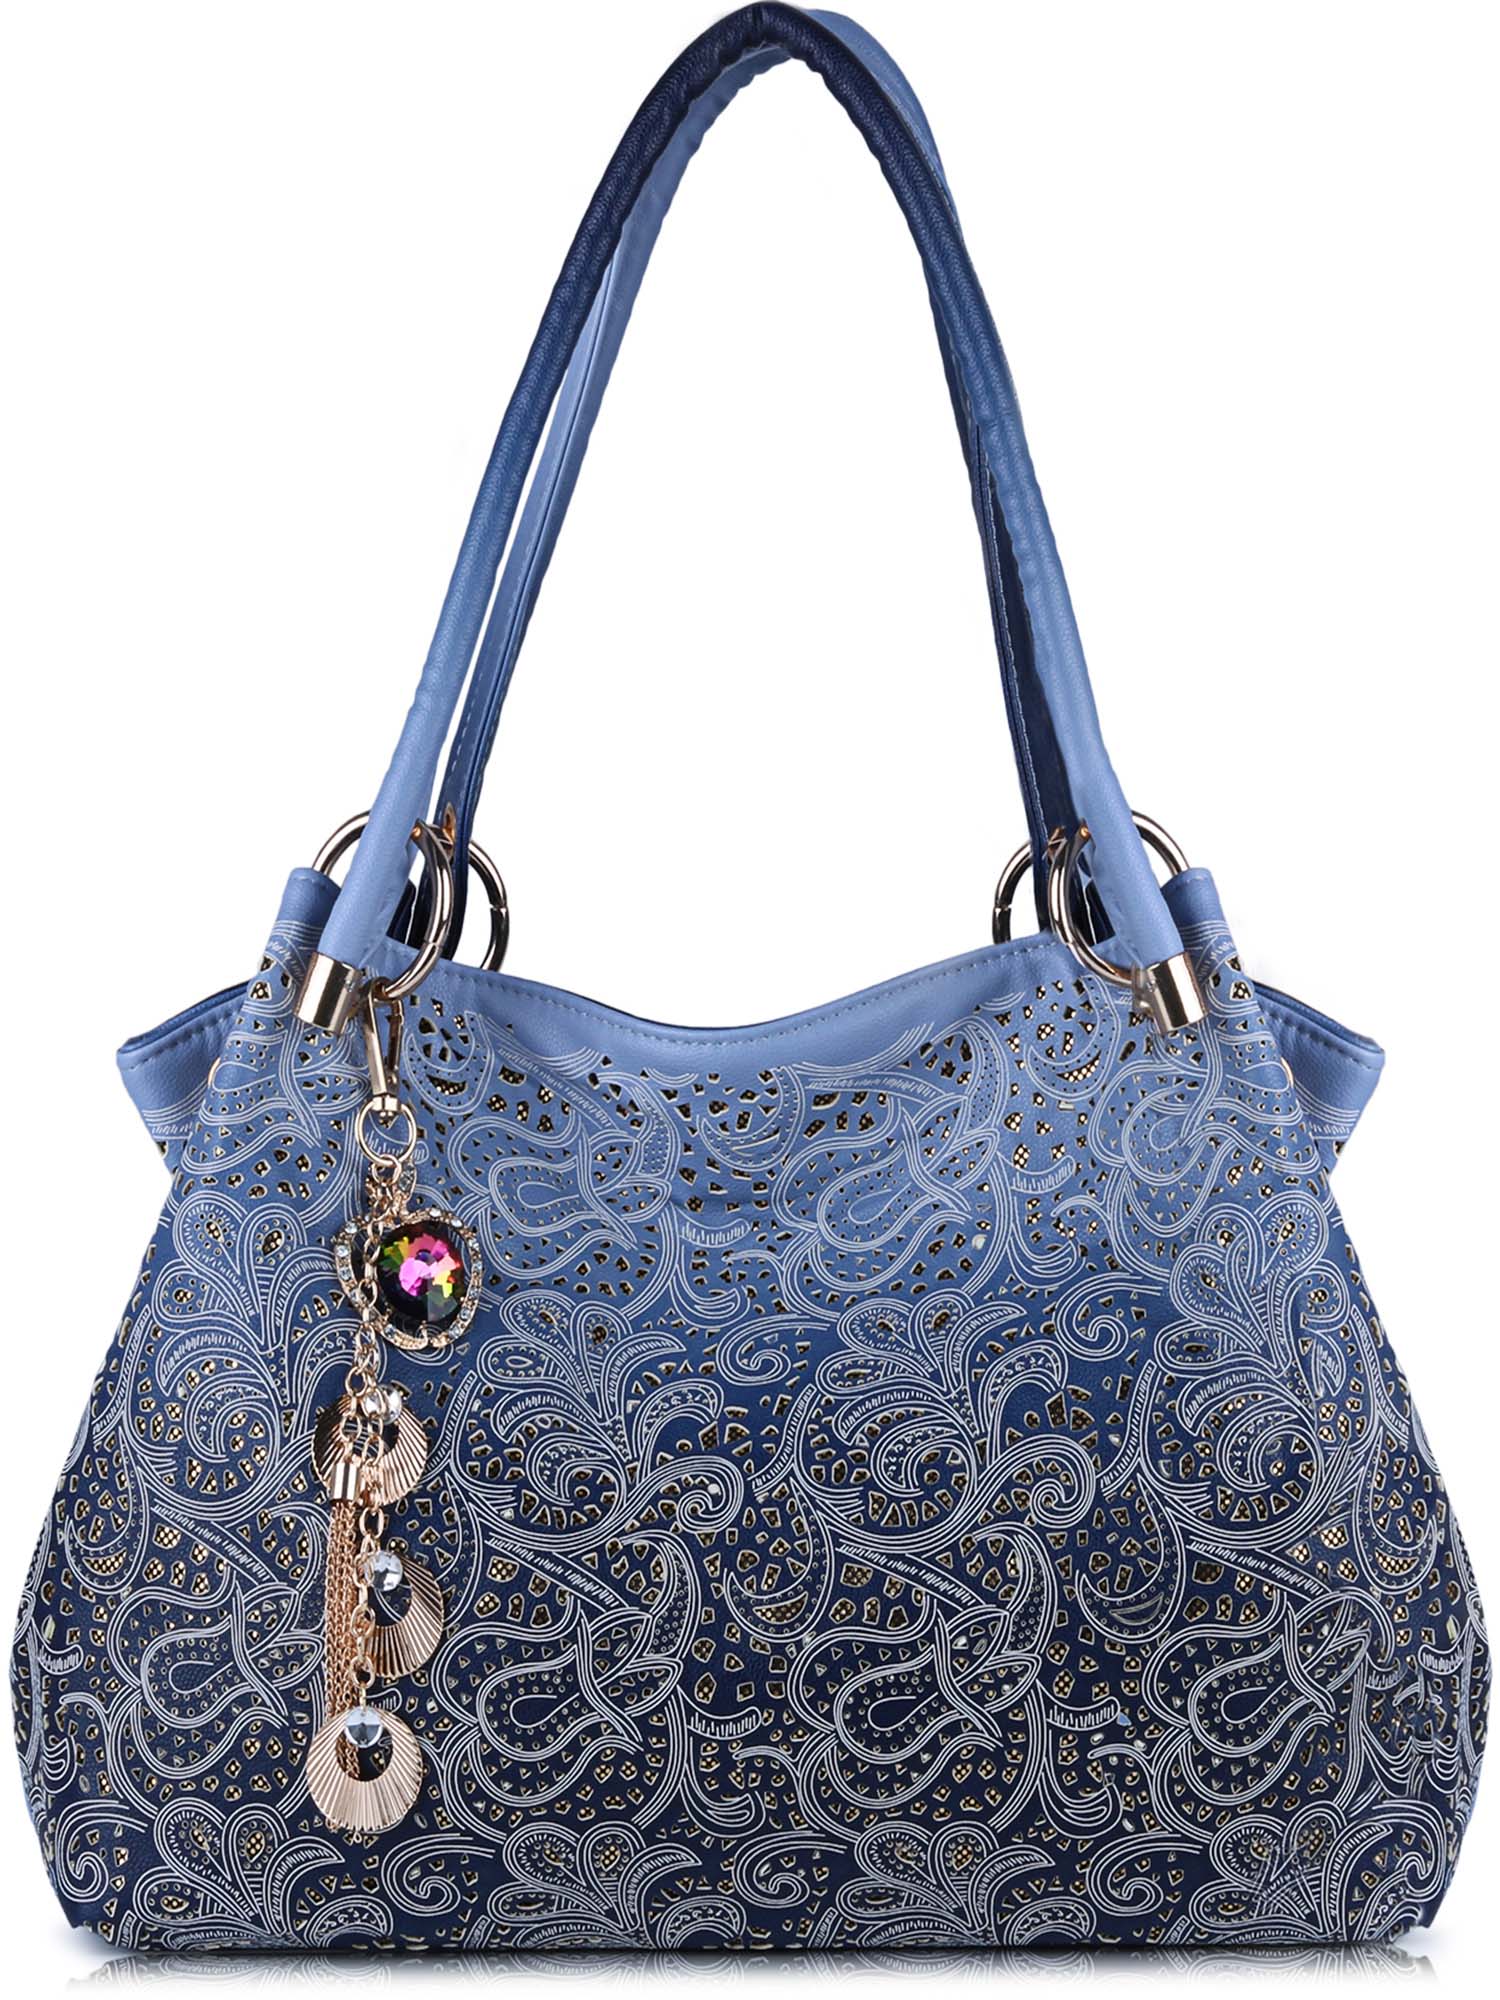 Handbags for Women, Peaoy Faux Leather Purse Ladies Handbag Vintage Designer Handbags Shoulder Bag Hollow Out Design with Fine Pendant Fashion Tote Bag - image 1 of 8